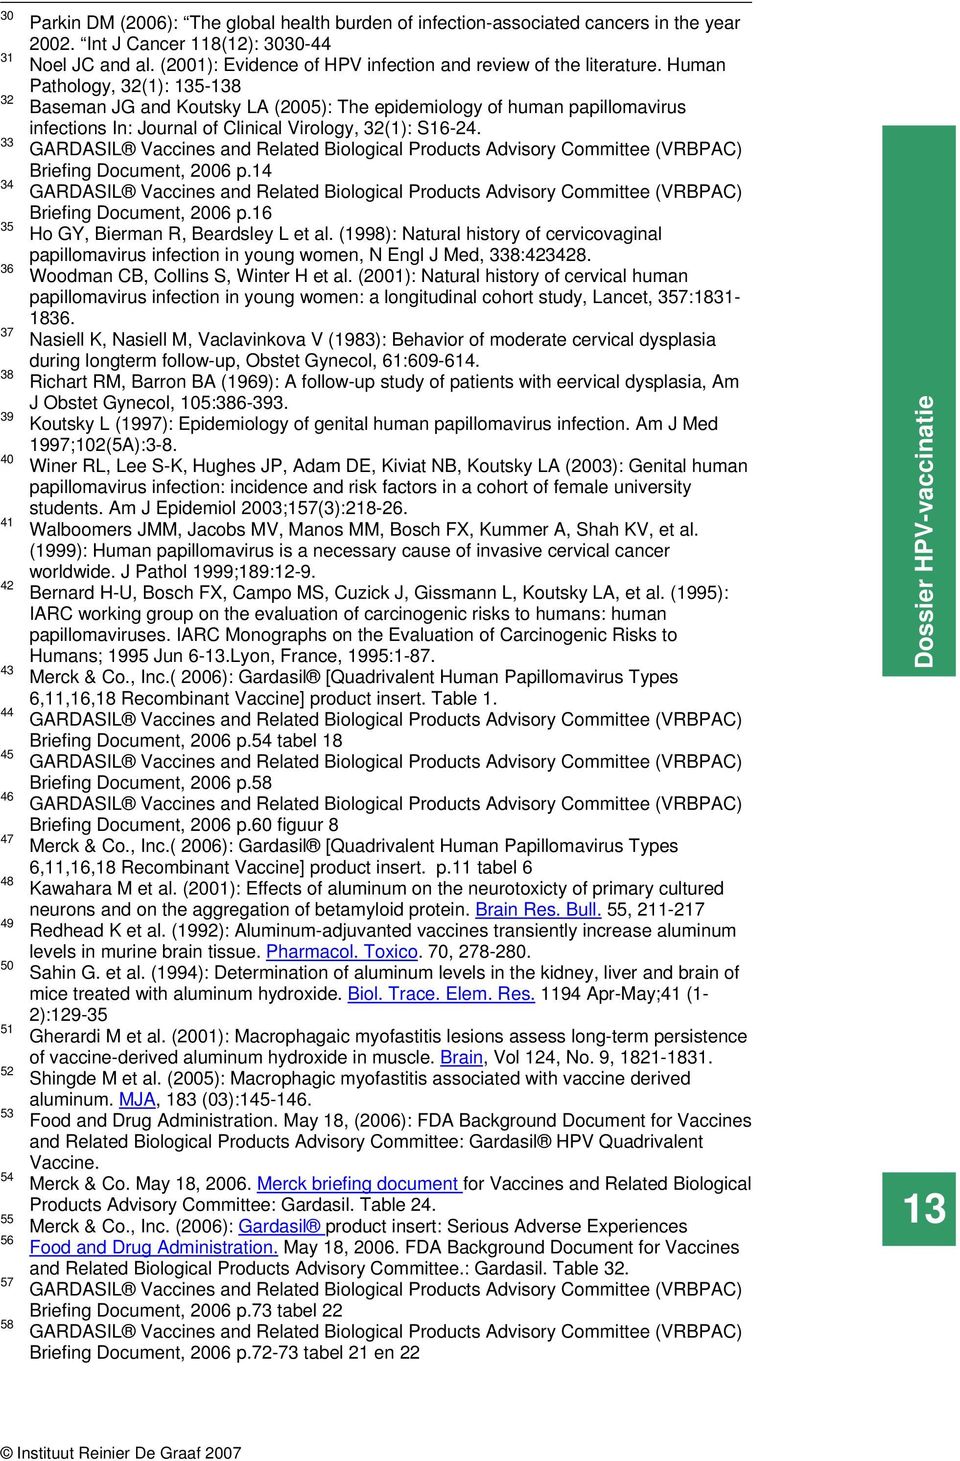 Human Pathology, 32(1): 135-138 Baseman JG and Koutsky LA (2005): The epidemiology of human papillomavirus infections In: Journal of Clinical Virology, 32(1): S16-24. Briefing Document, 2006 p.